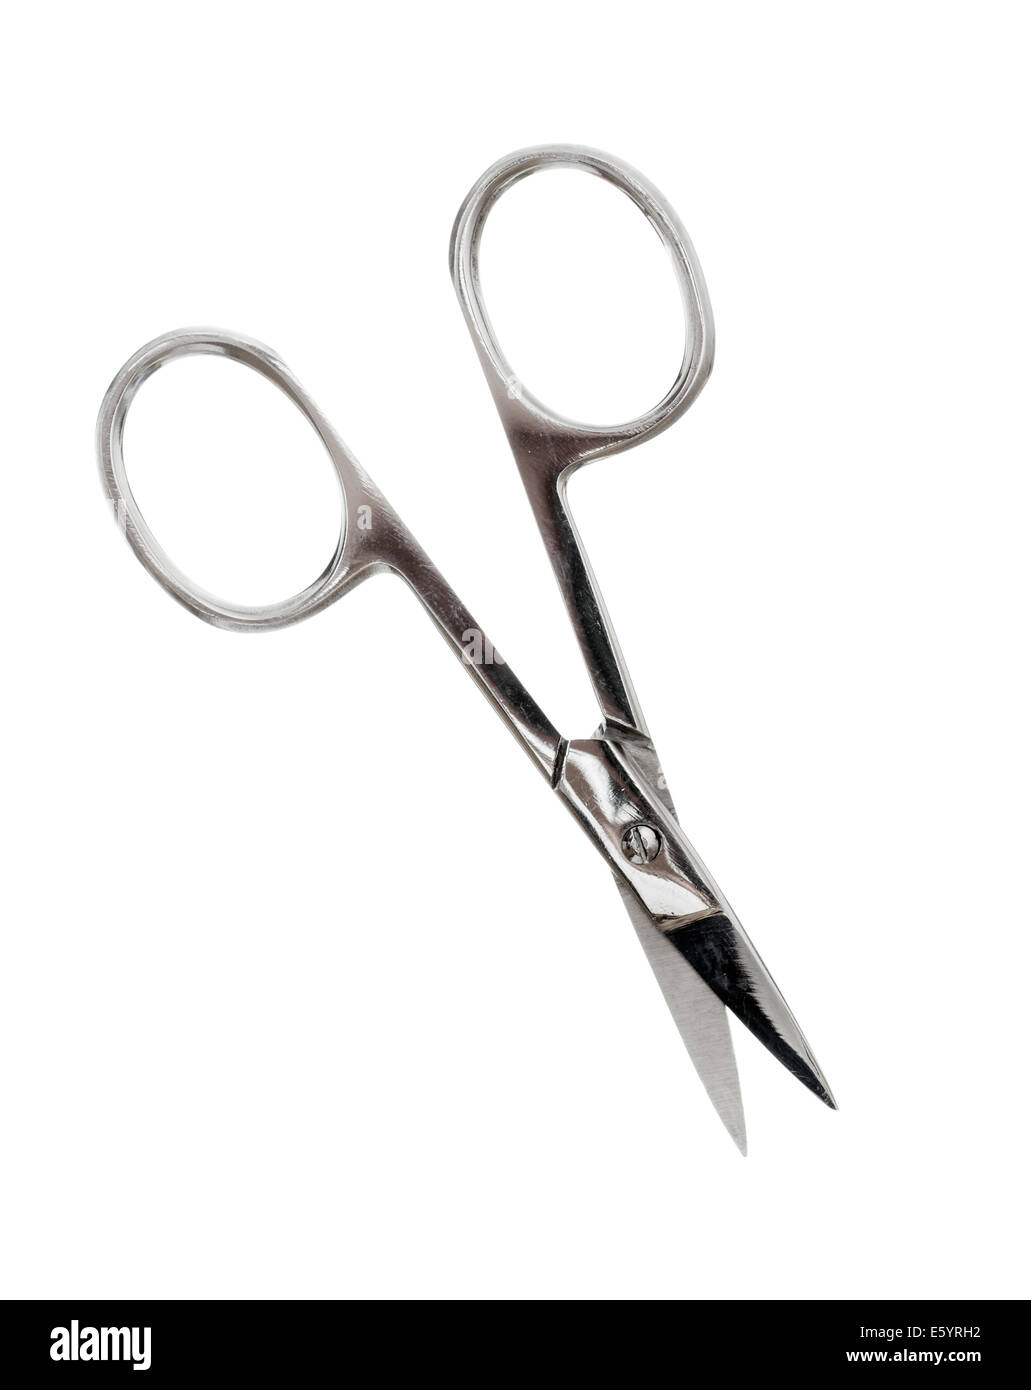 INGLOT Nail Scissors